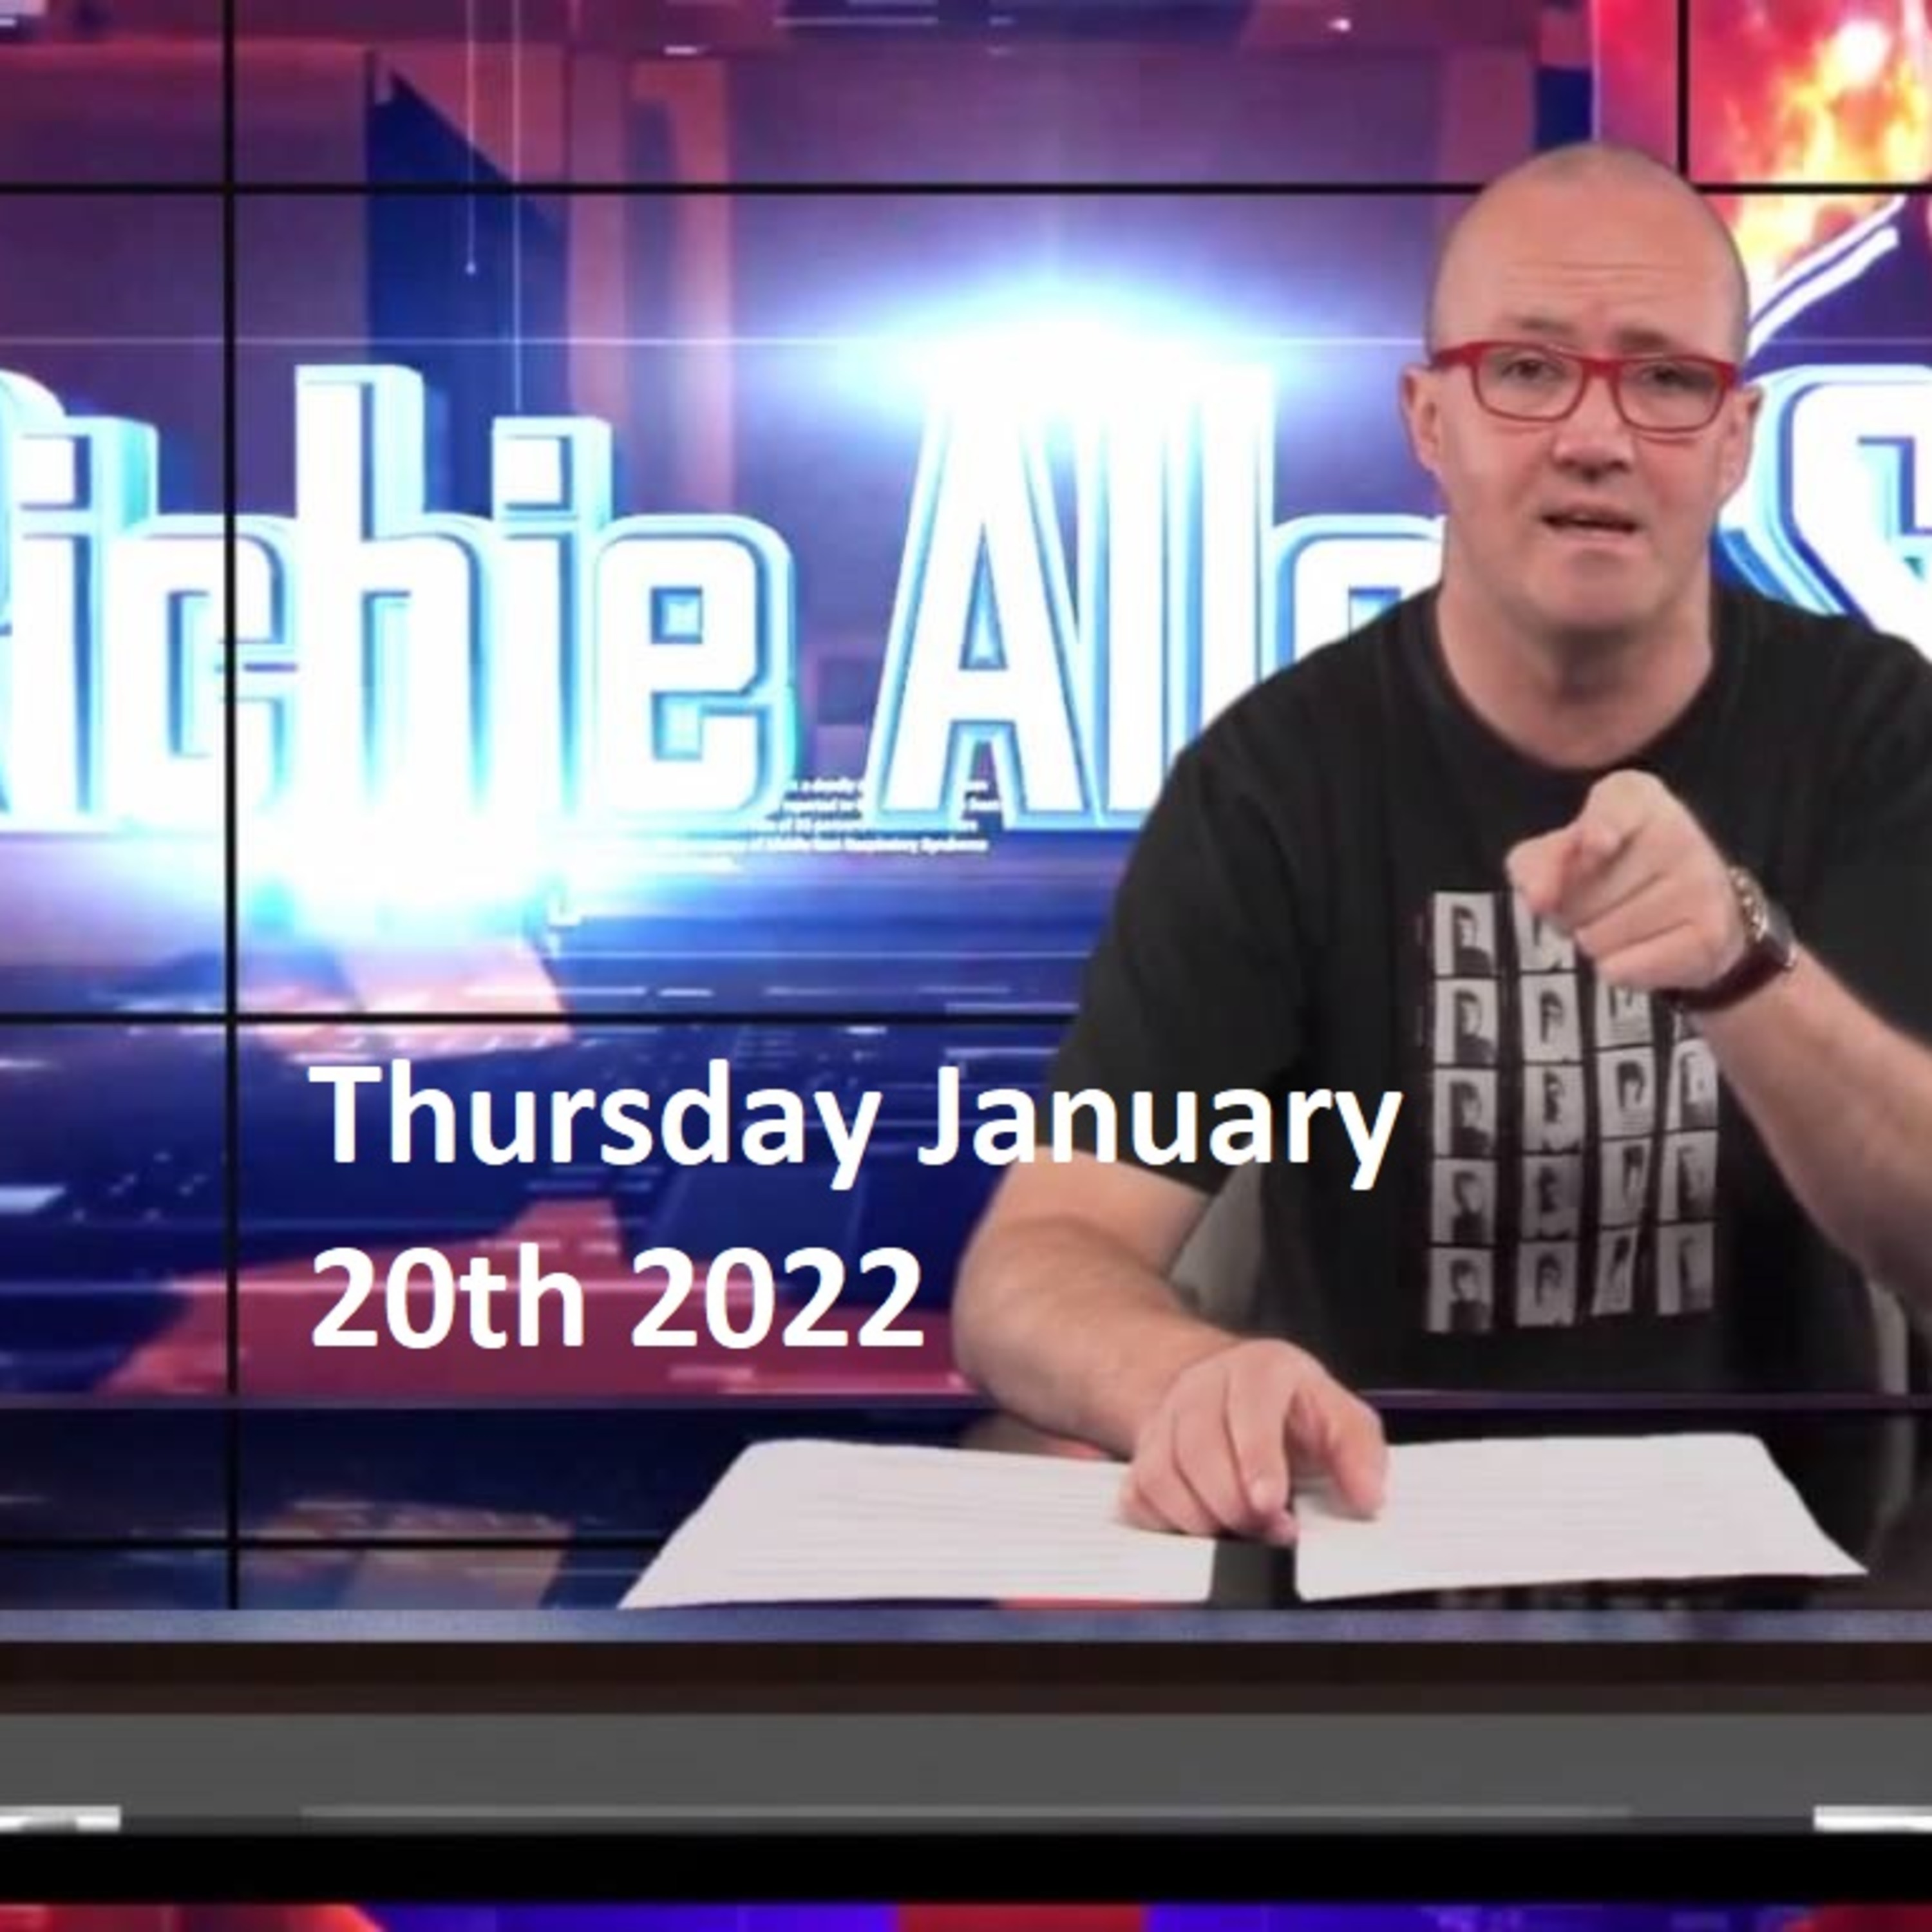 Episode 1393: The Richie Allen Show Thursday January 20th 2022